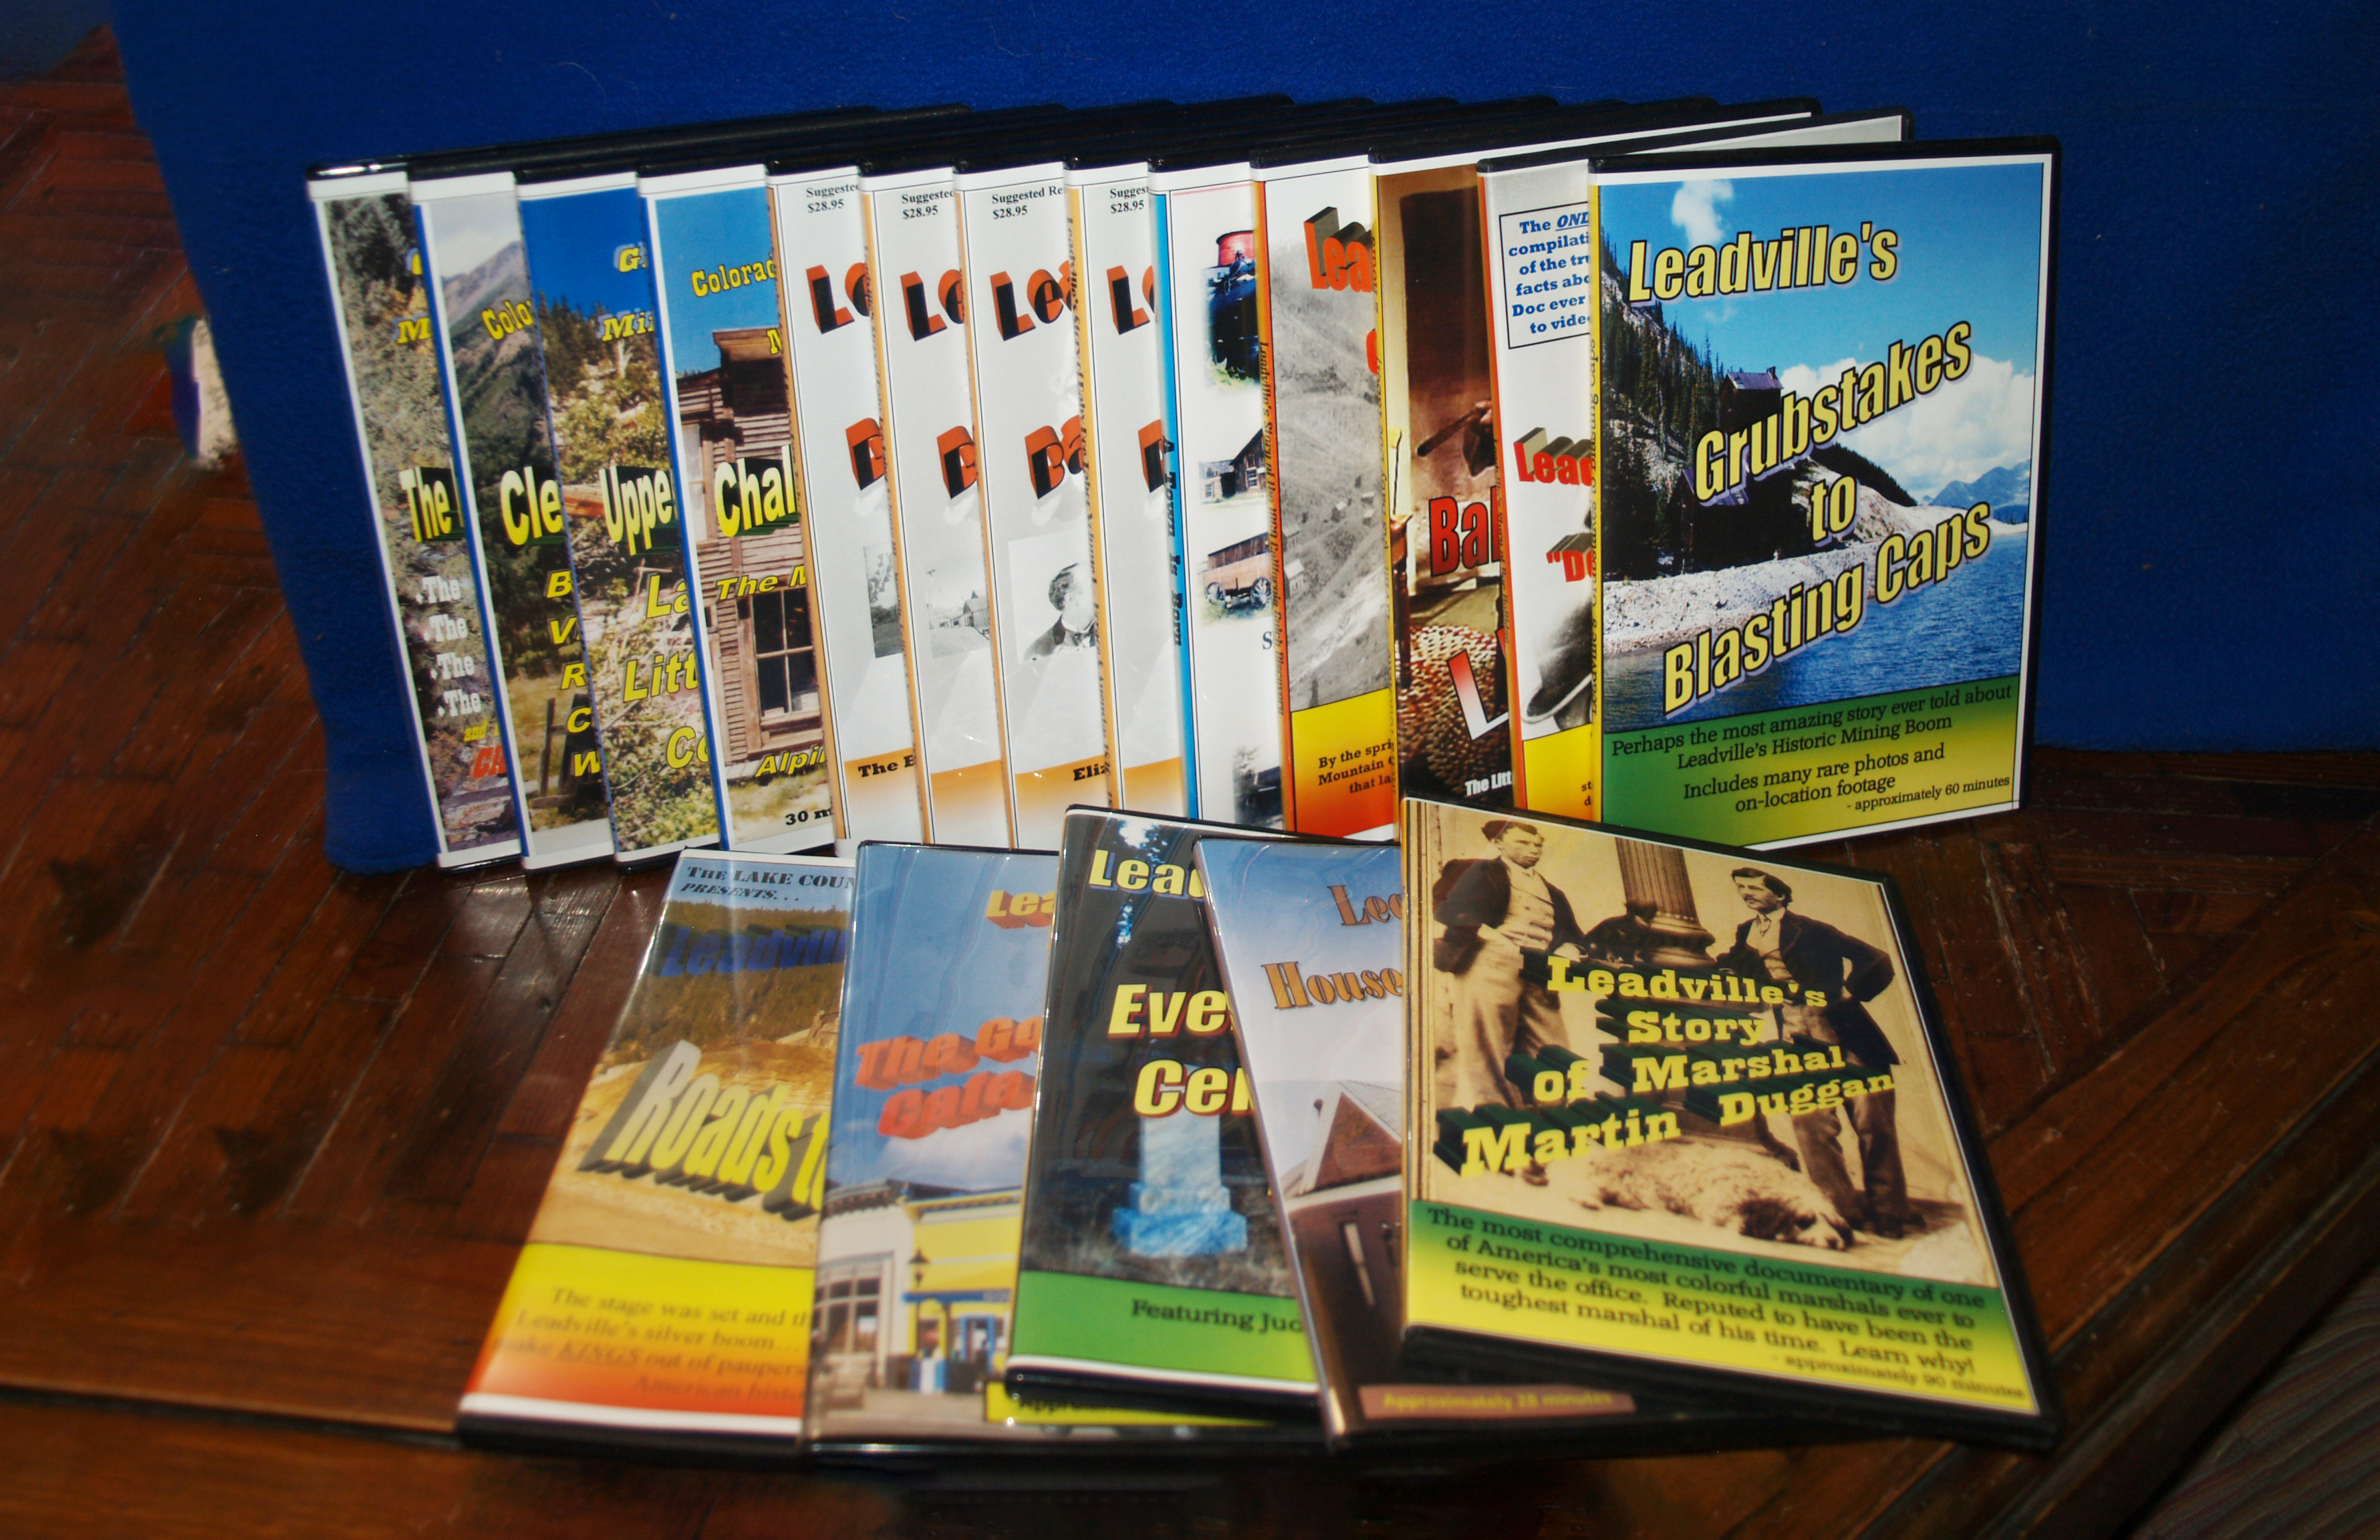 Photo of DVD titles